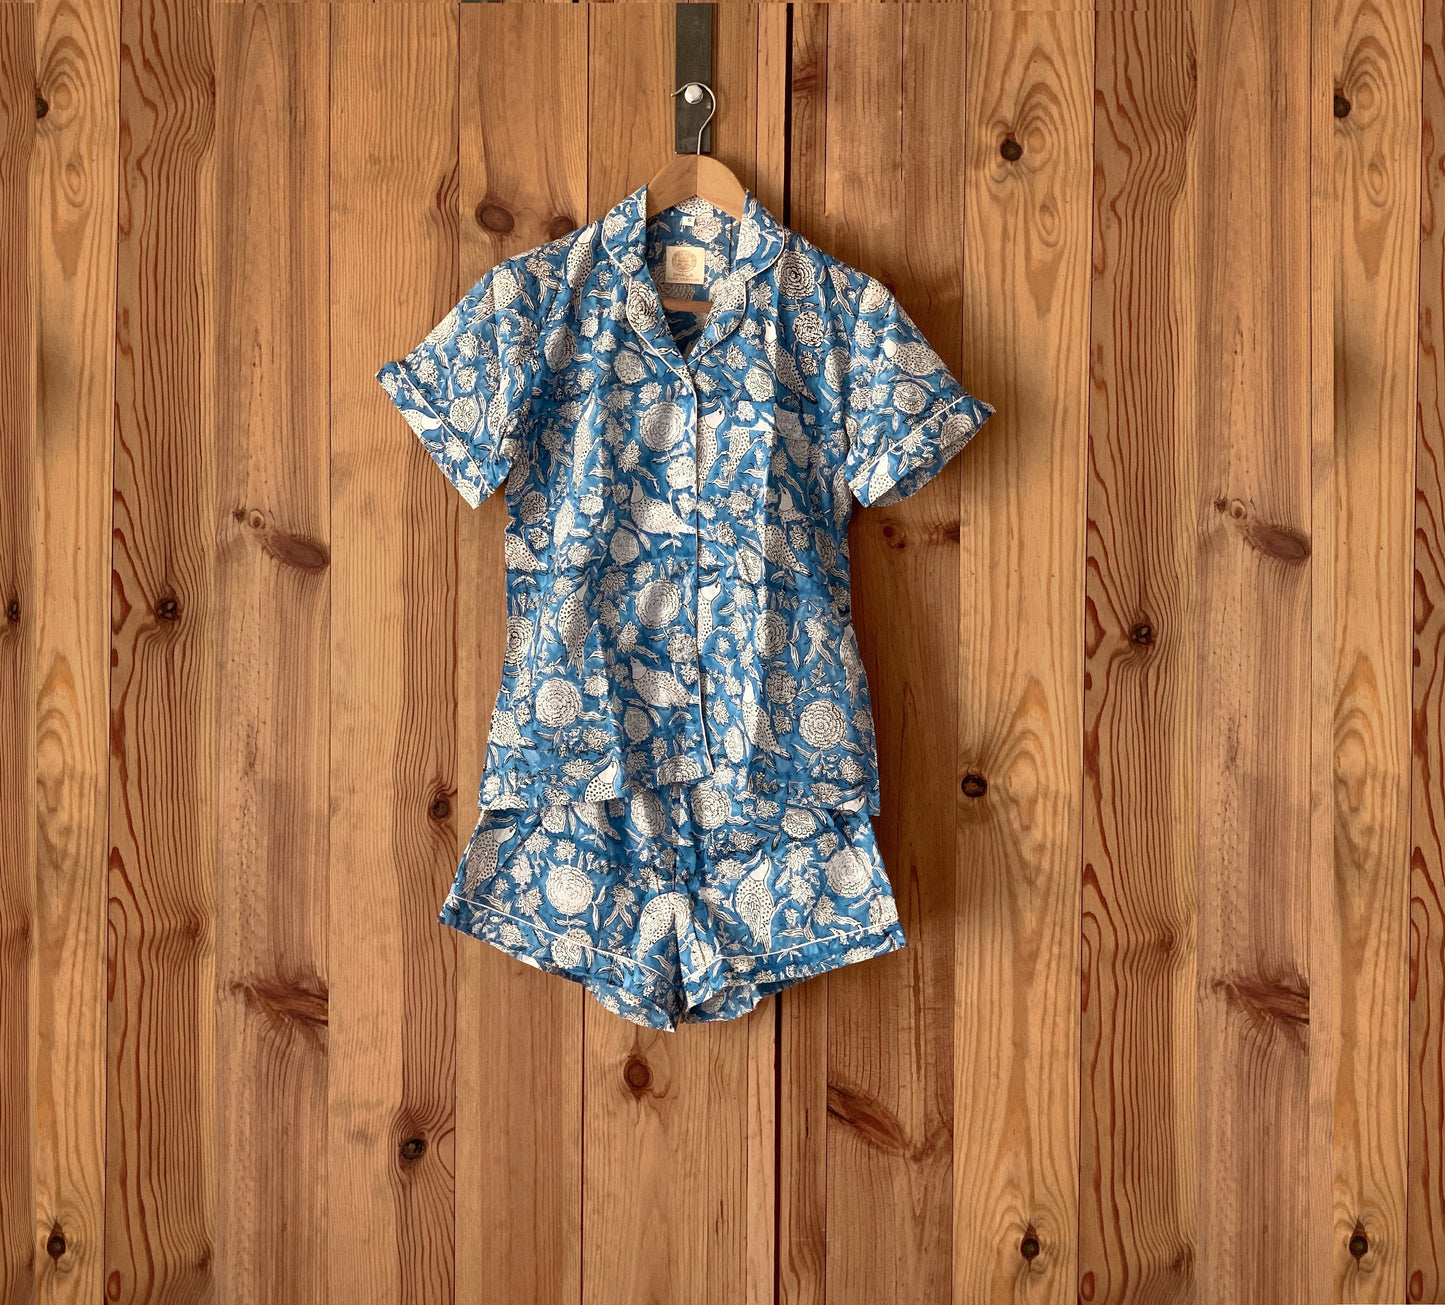 Short-sleeved pajamas · Pure cotton block print artisanal in India · 100% cotton summer pajamas · Blue white flowers